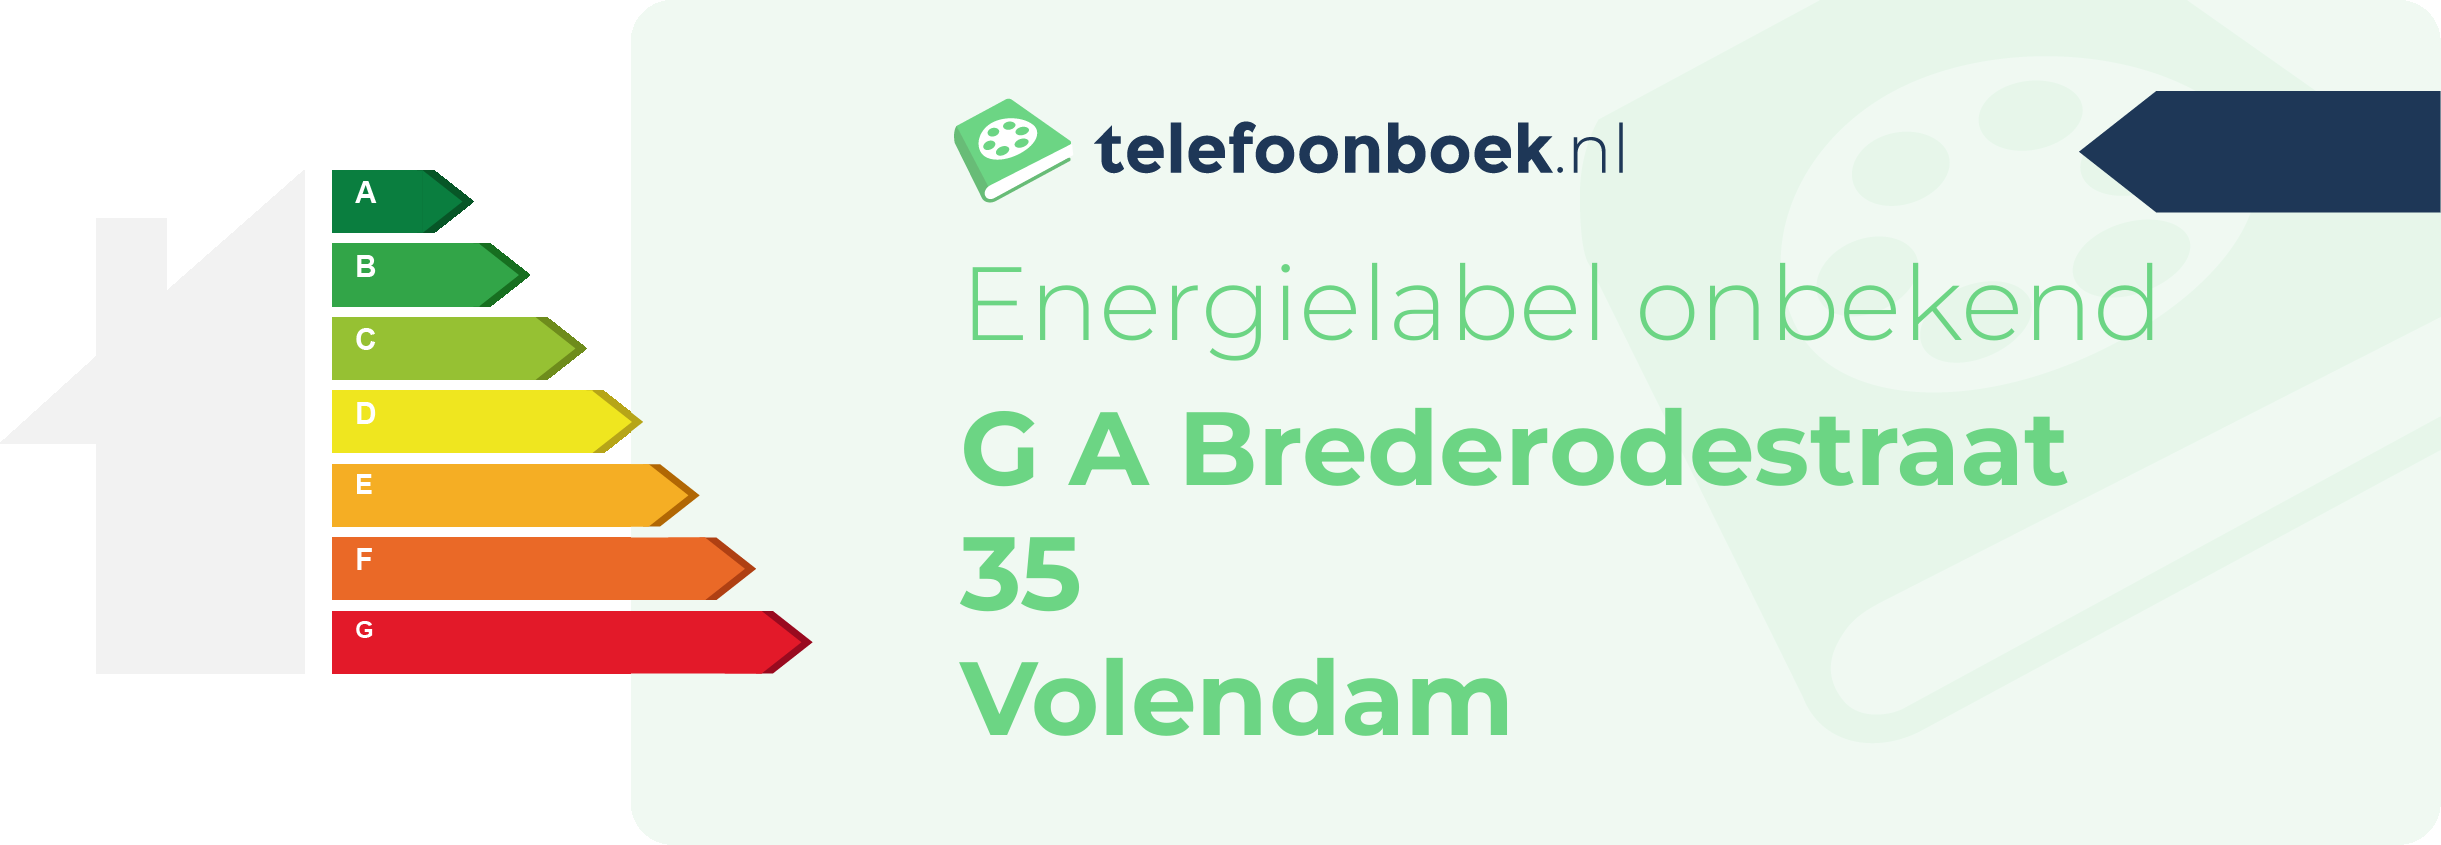 Energielabel G A Brederodestraat 35 Volendam